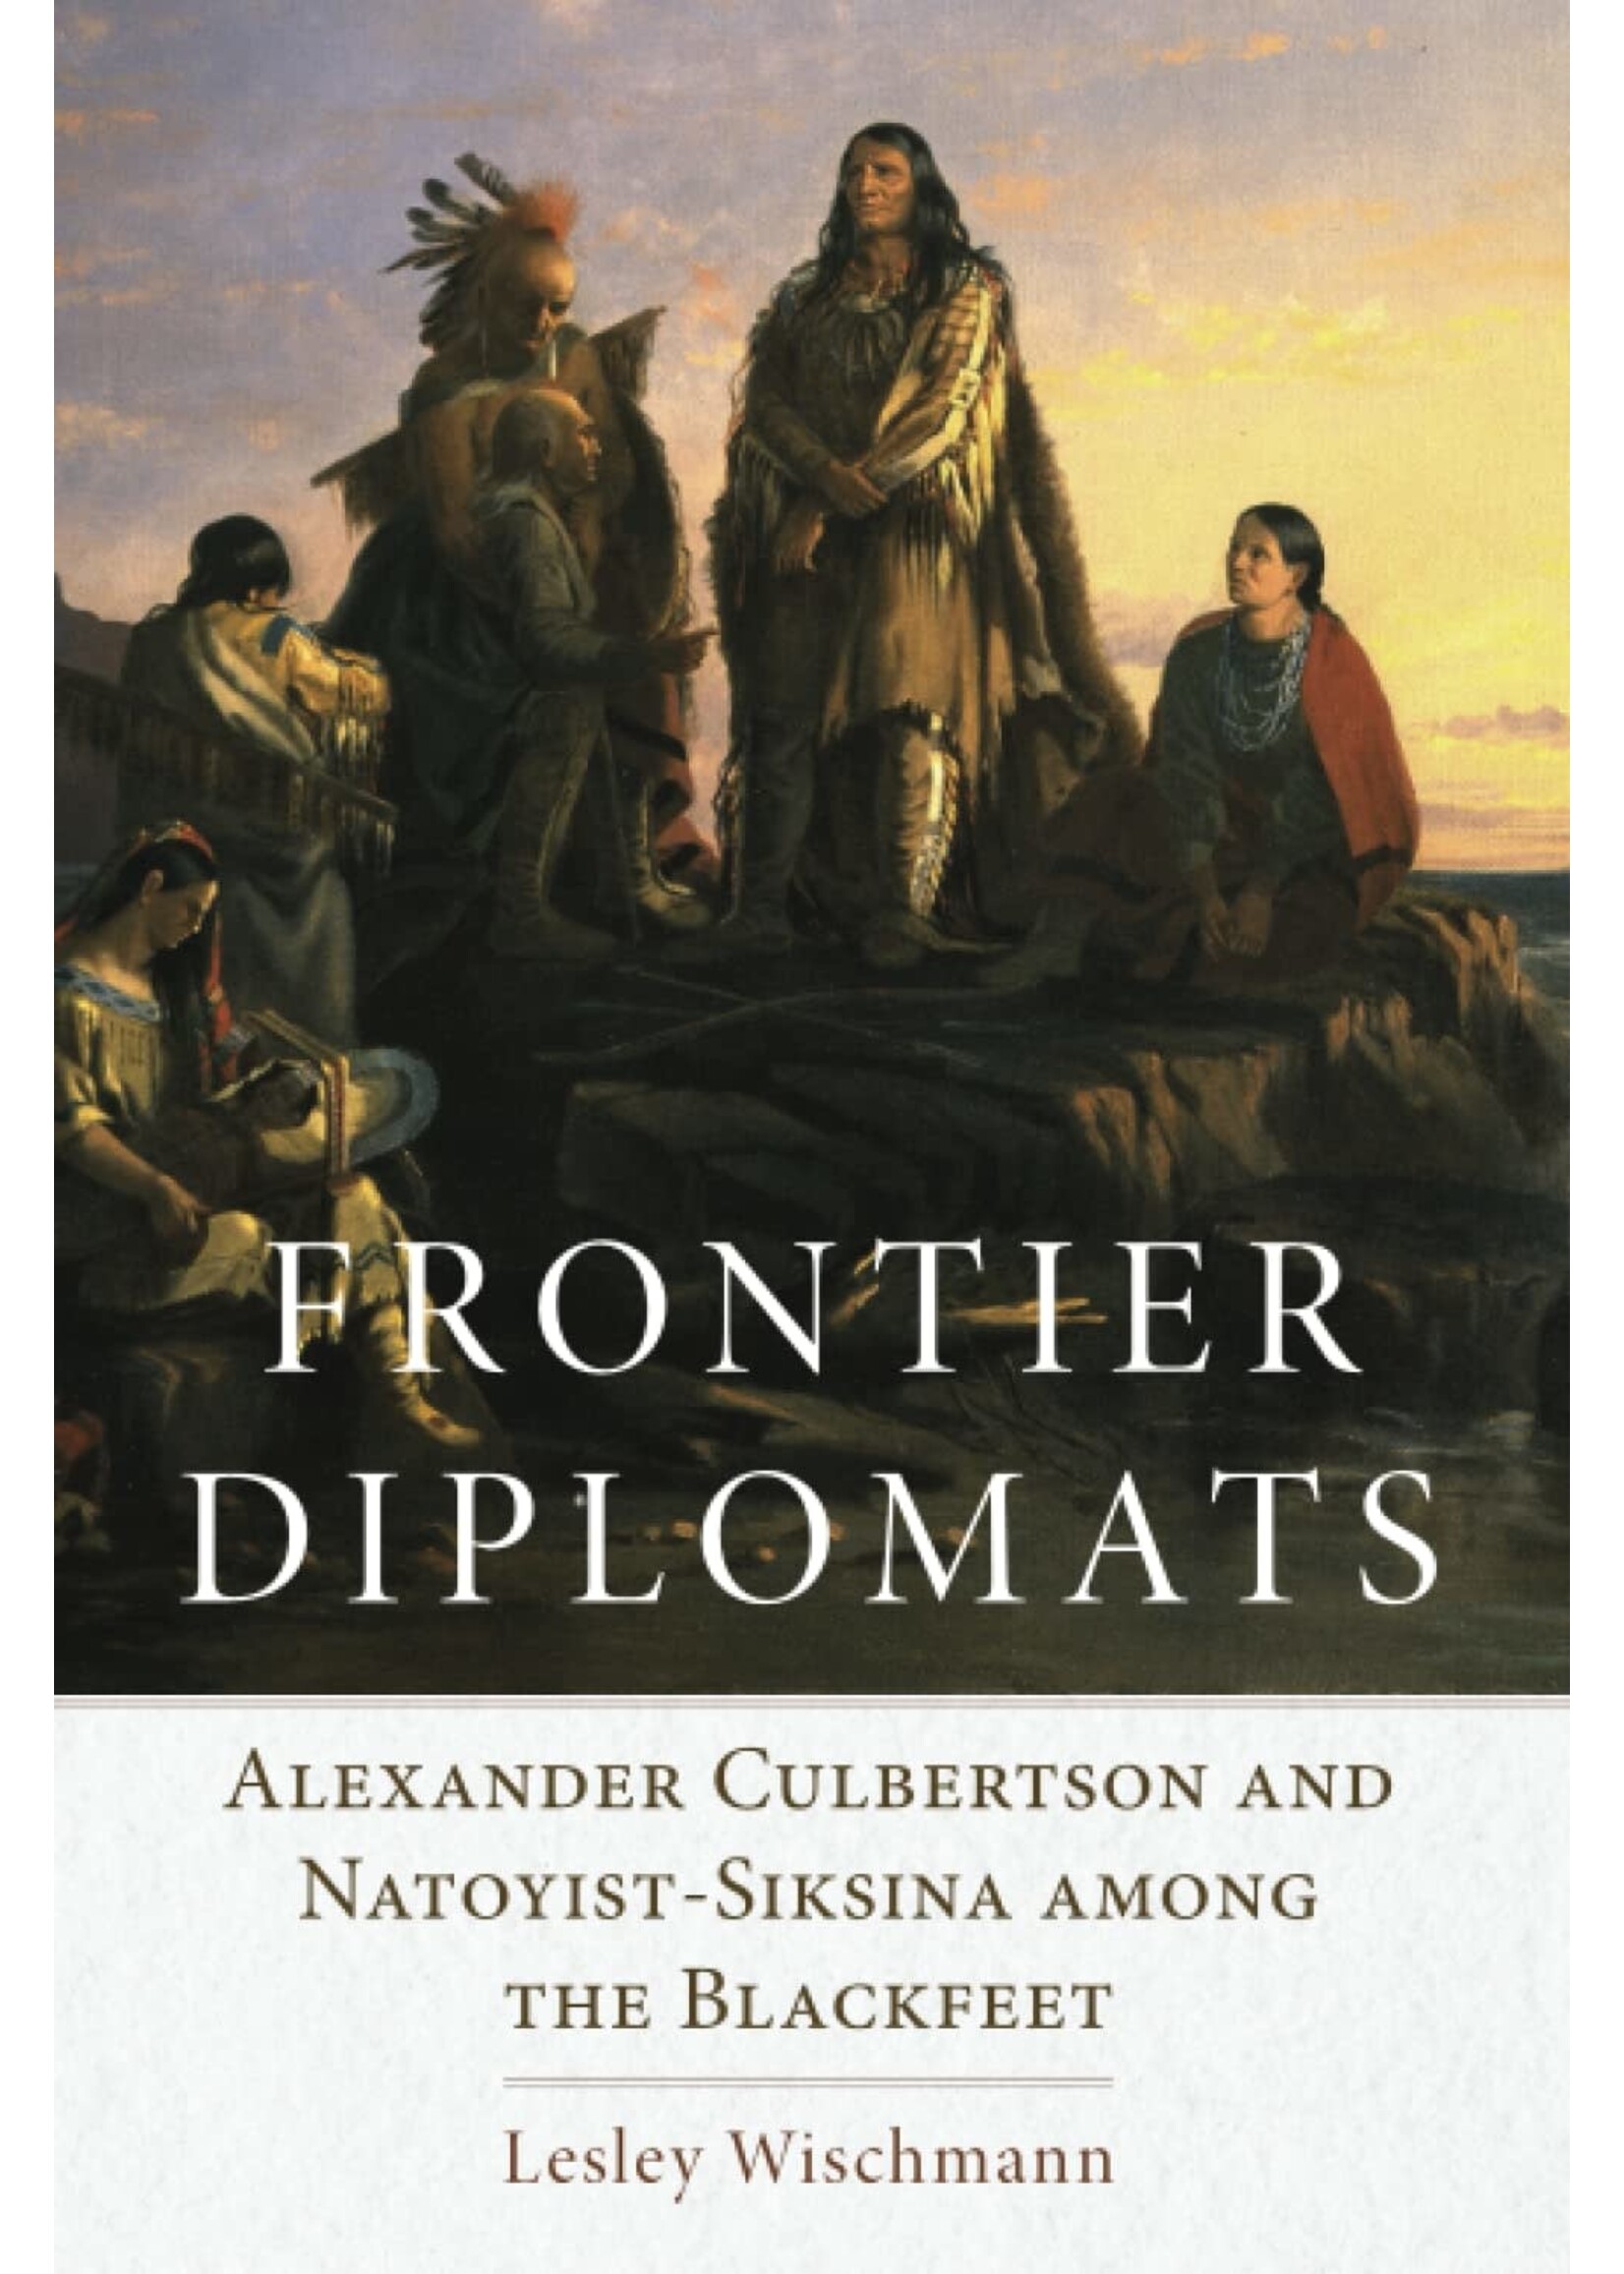 Frontier Diplomats